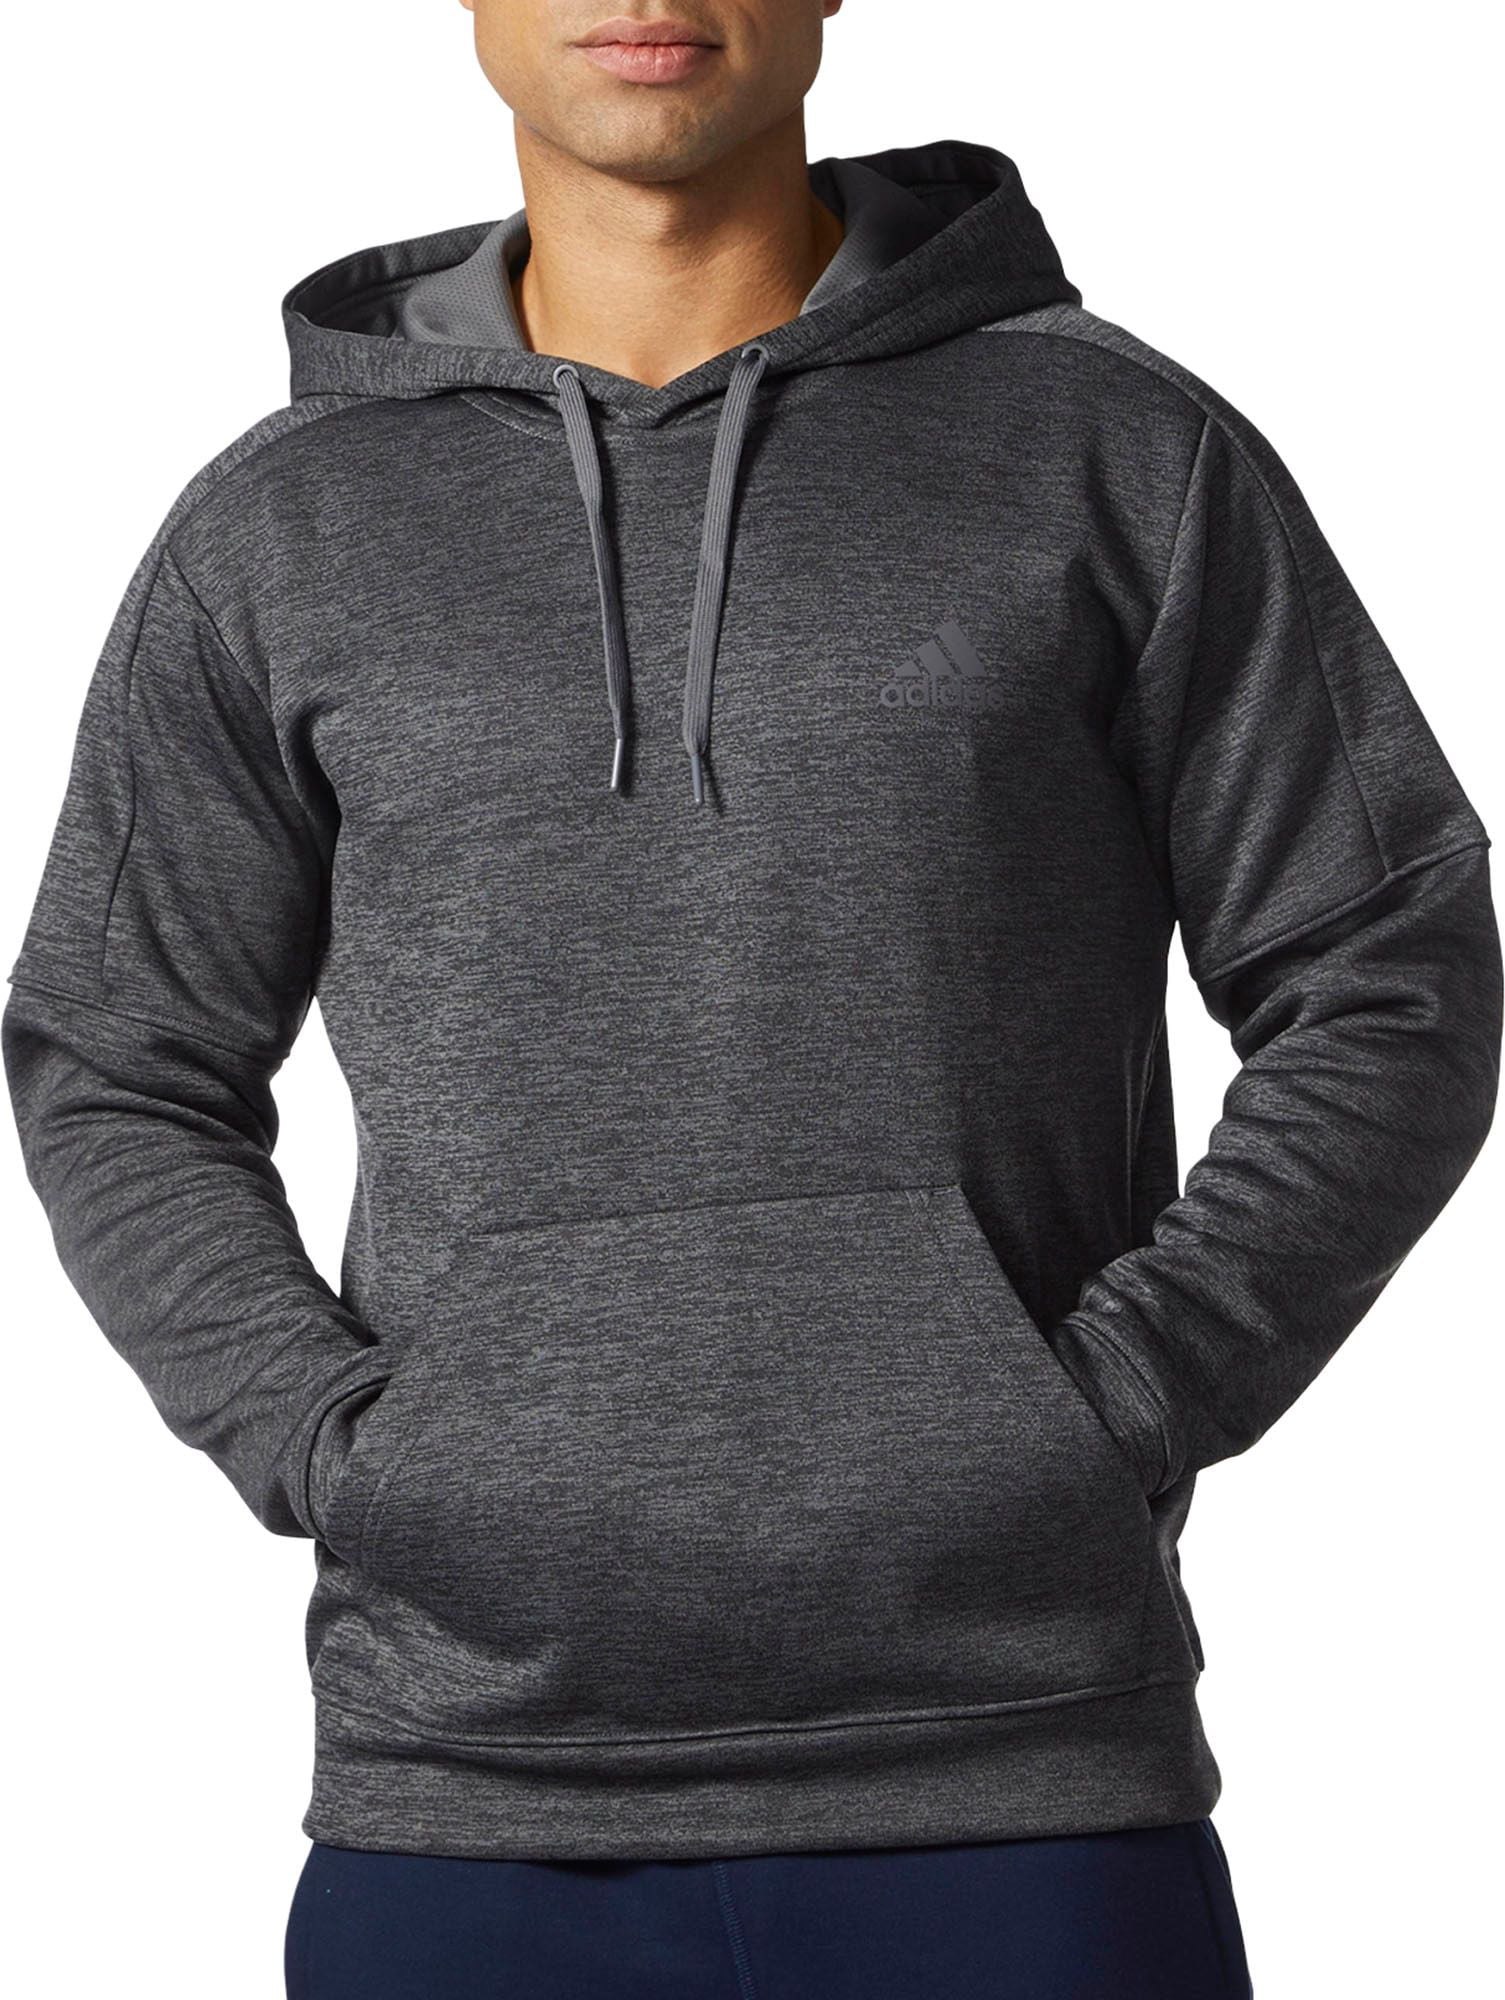 adidas men's team issue fleece hoodie